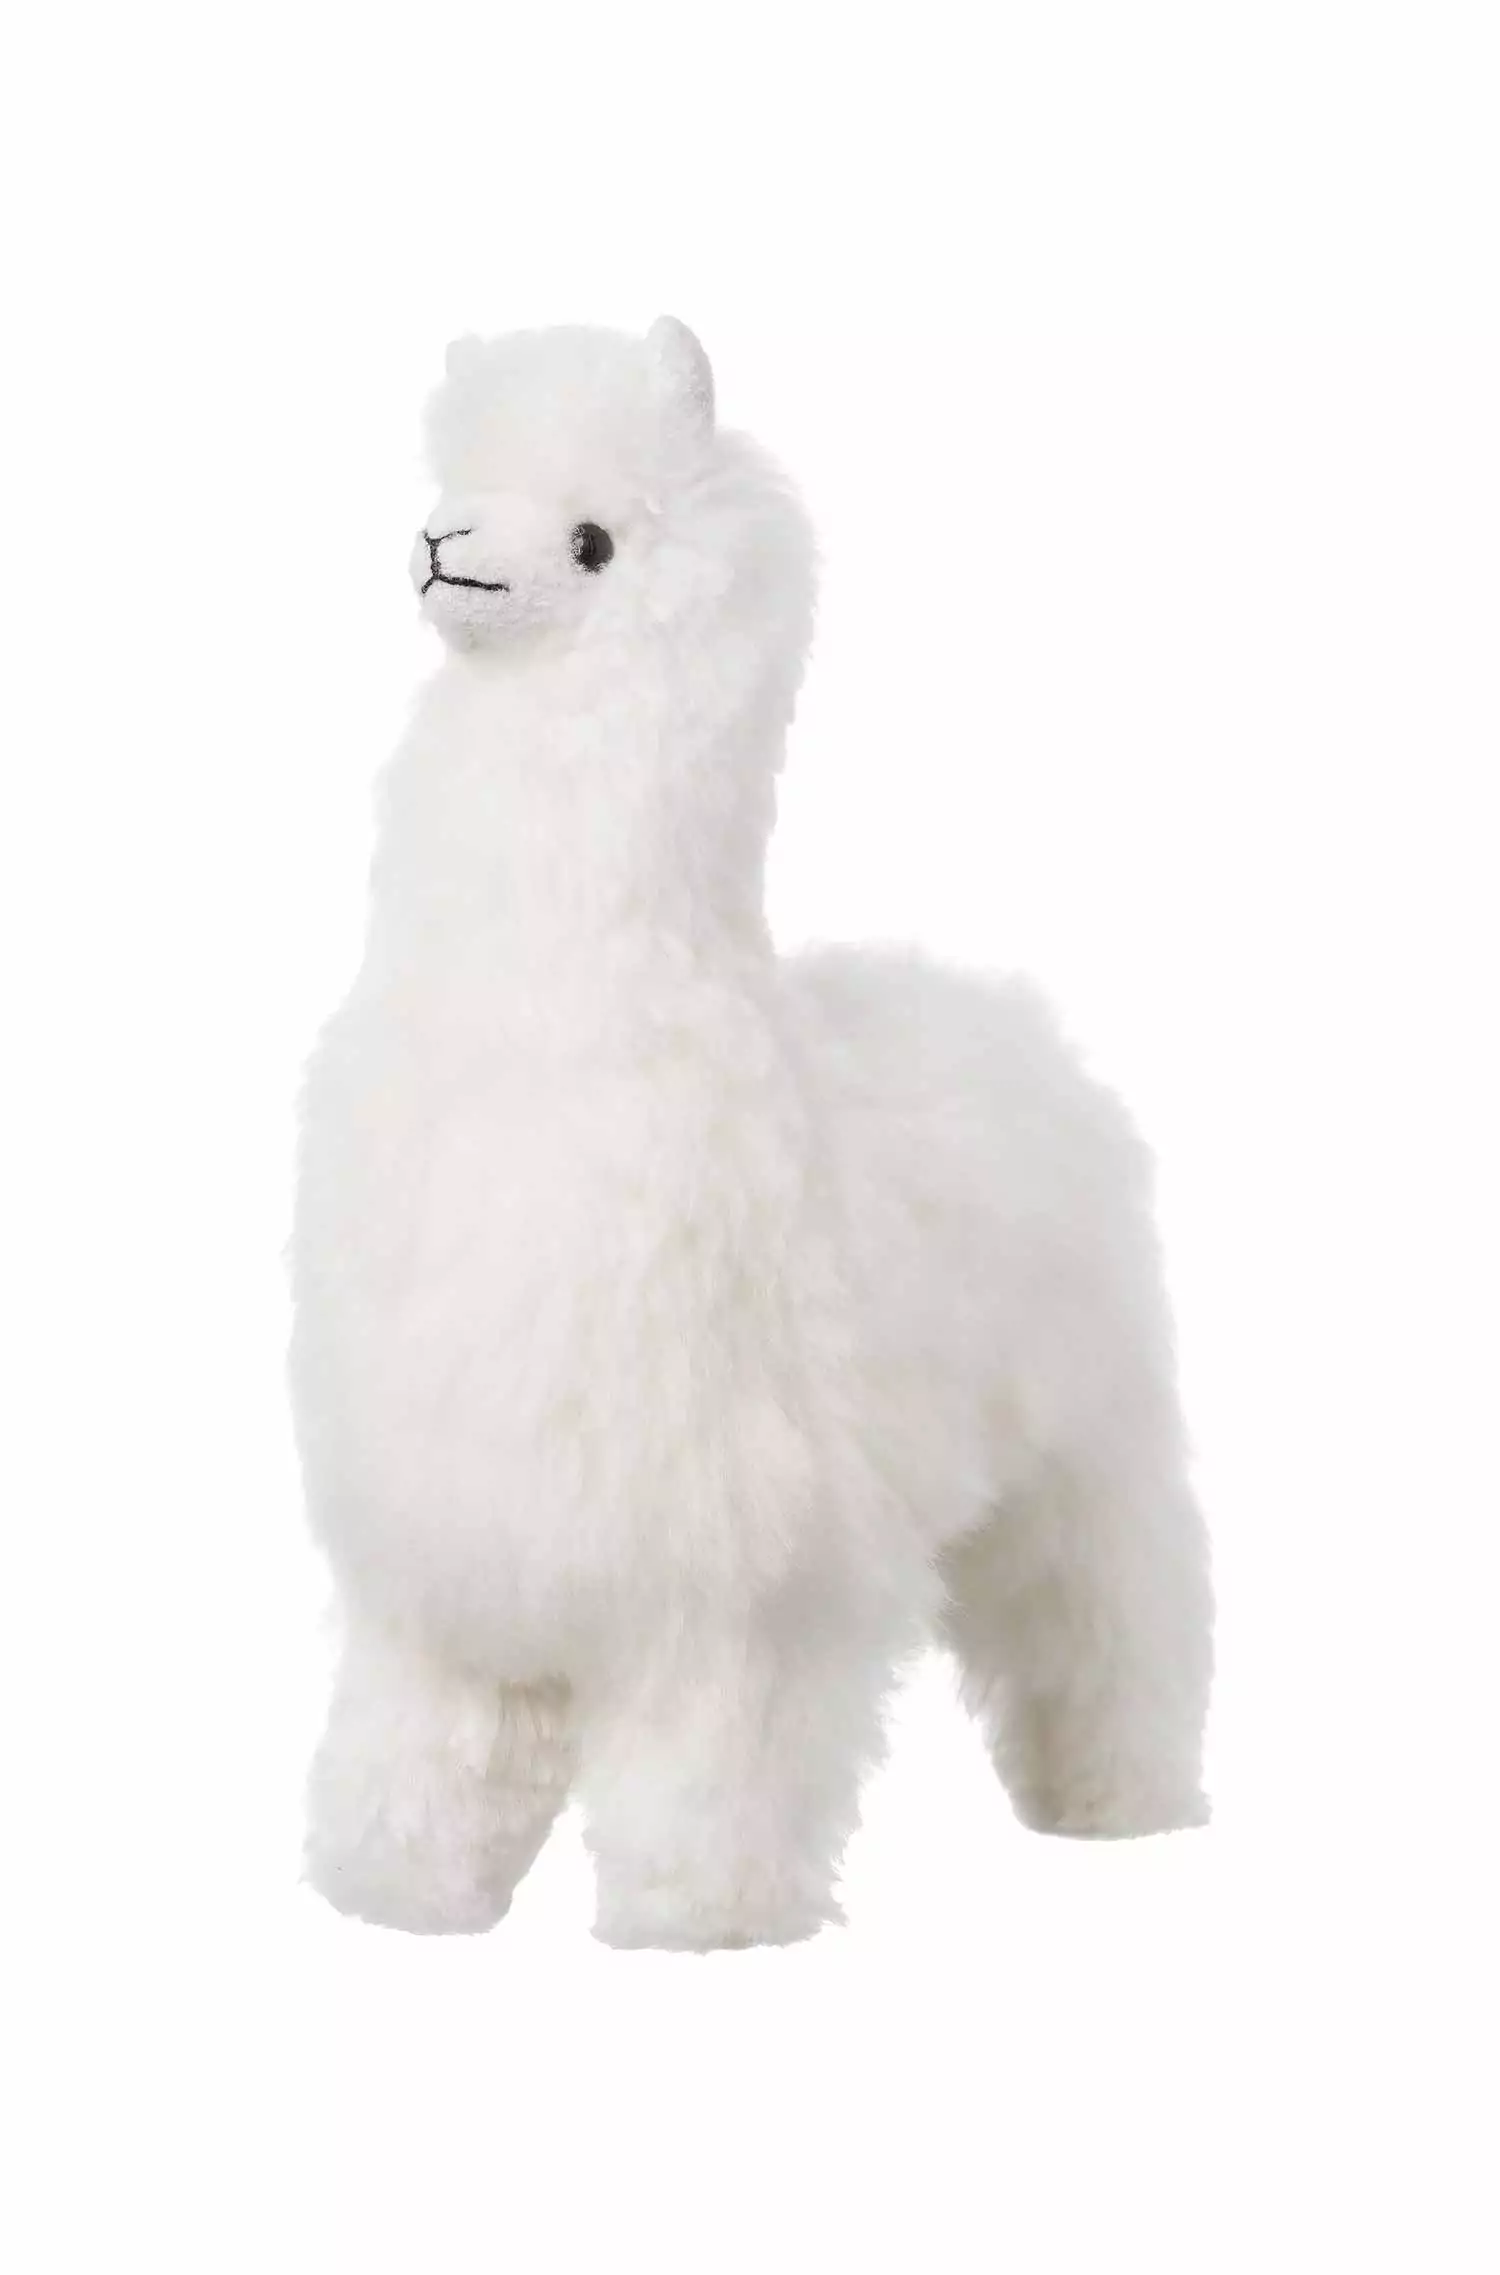 Overleg Armoedig Vaderlijk Alpaca COZY FURIOUS ANIMAL (30cm) from alpaca fur